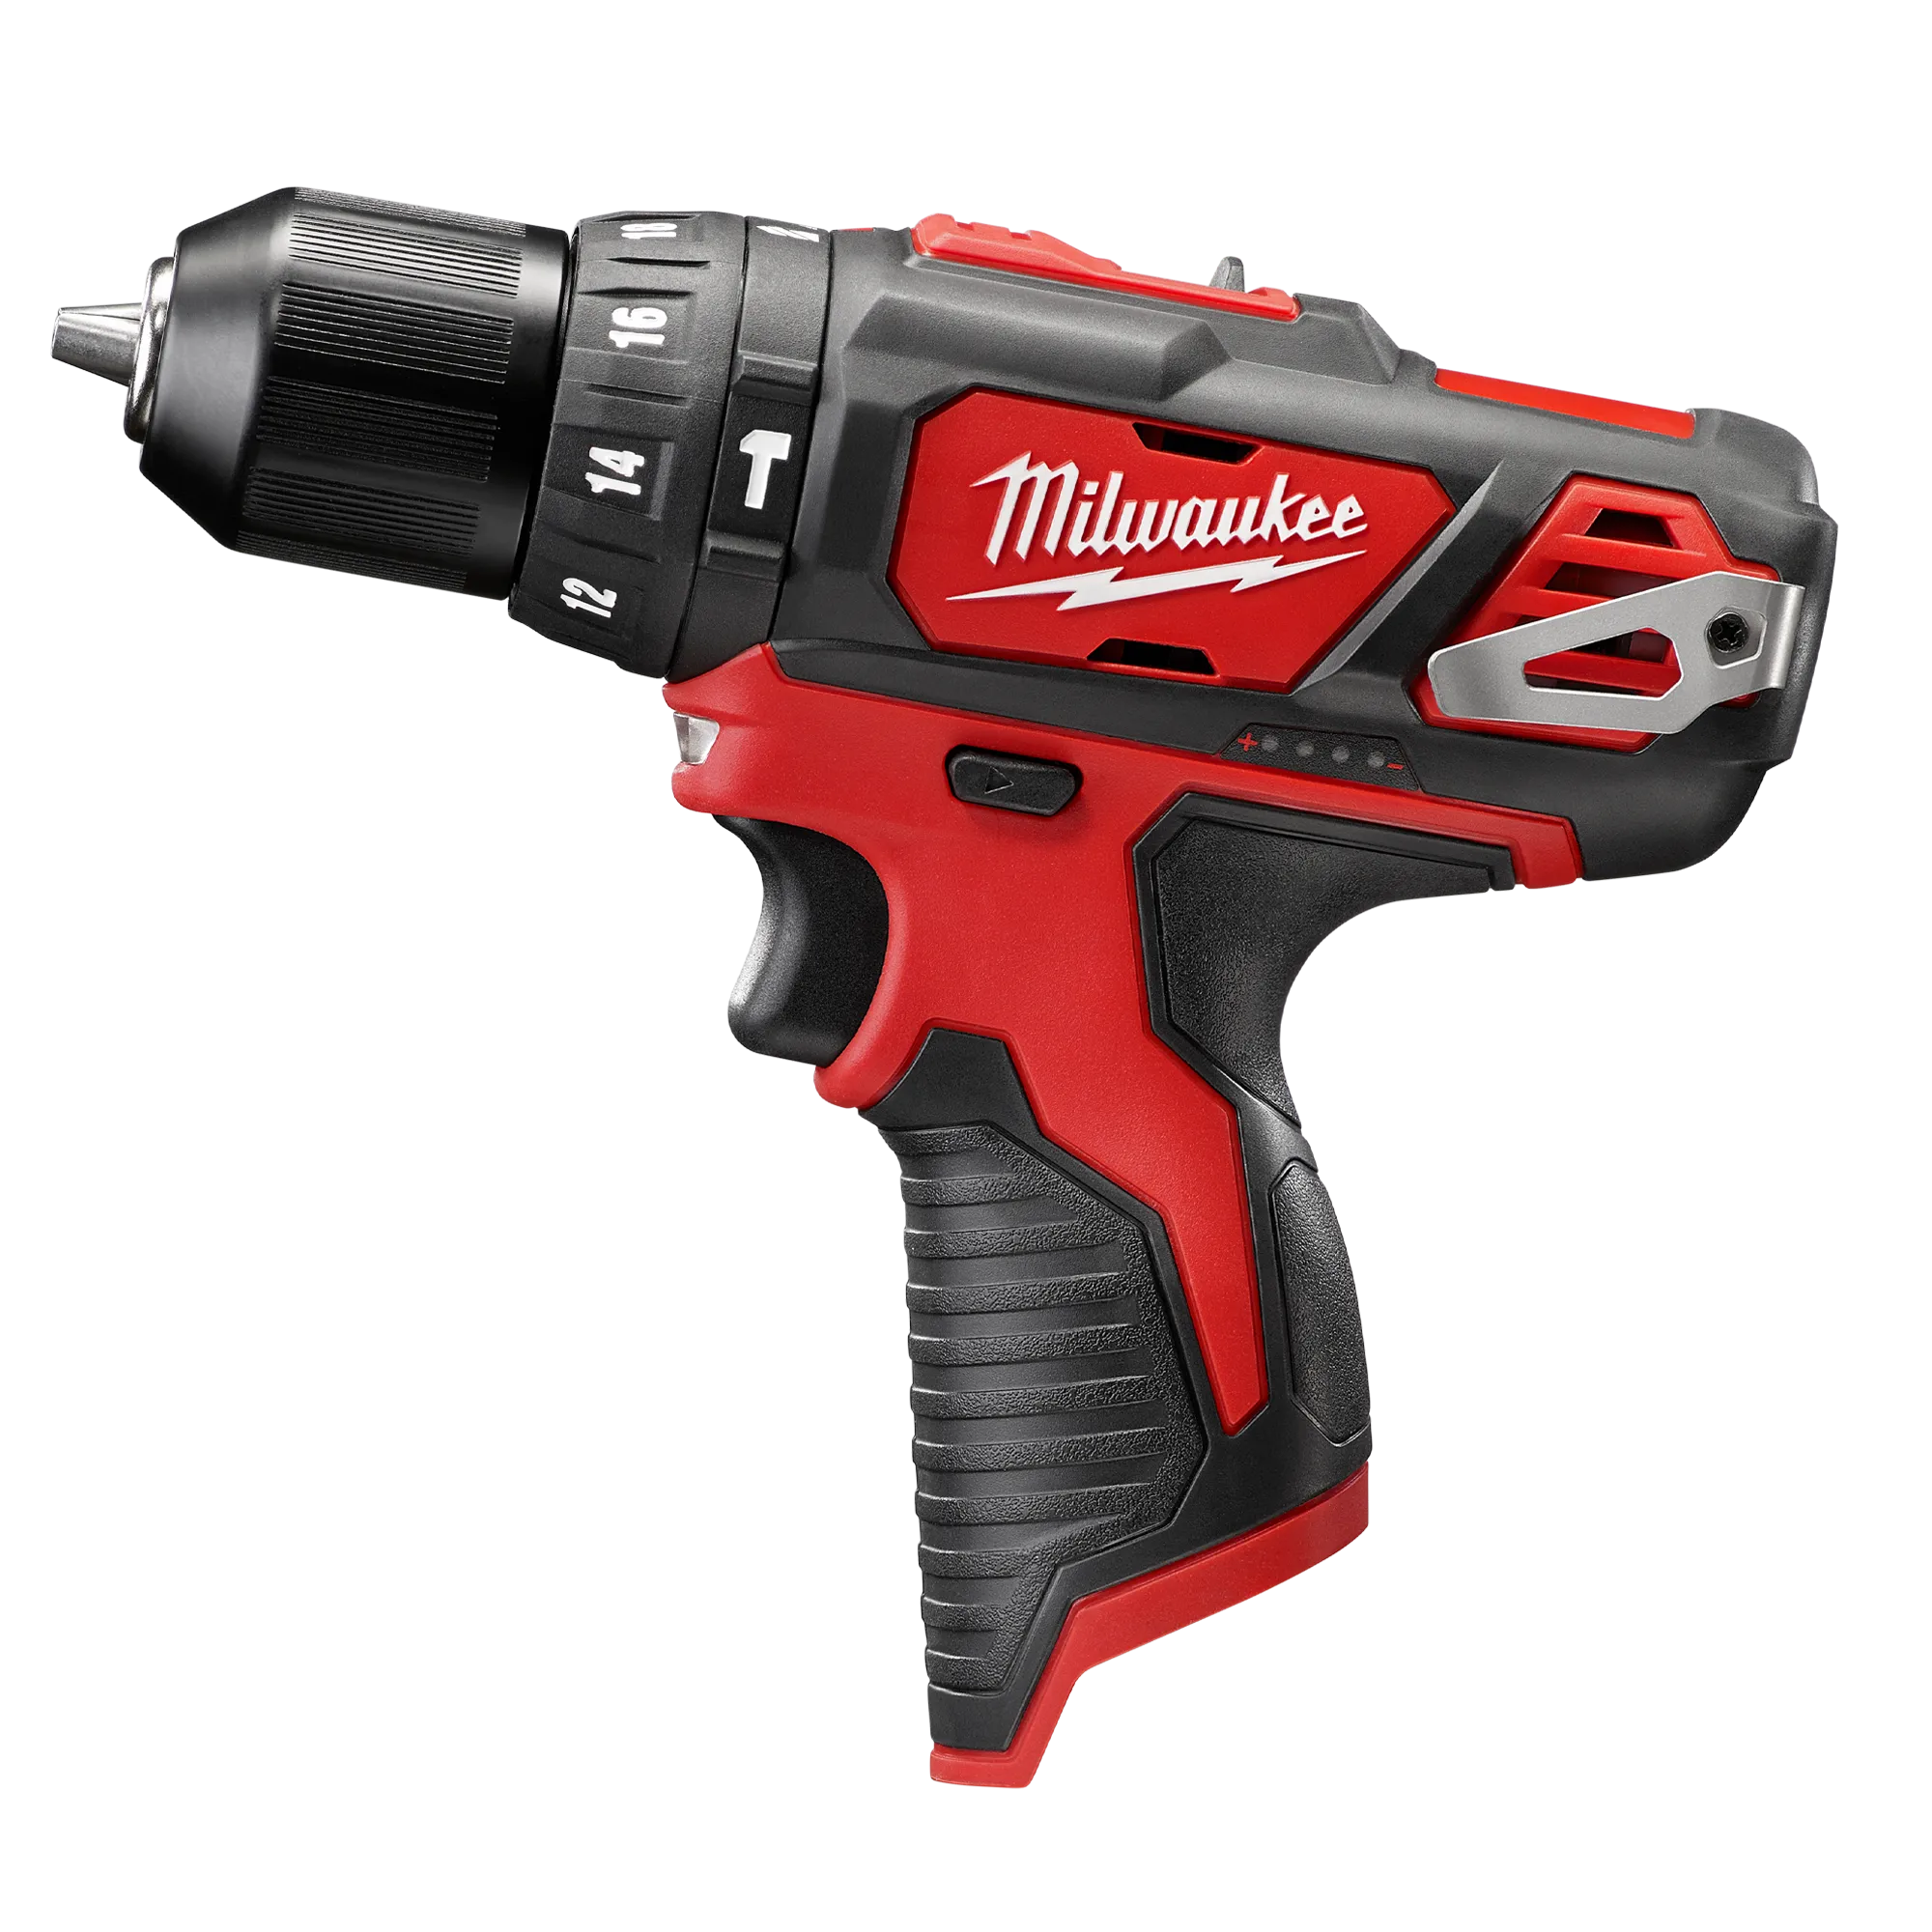 2408-20 - M12 3/8" Hammer Drill/Driver Kit, 2408